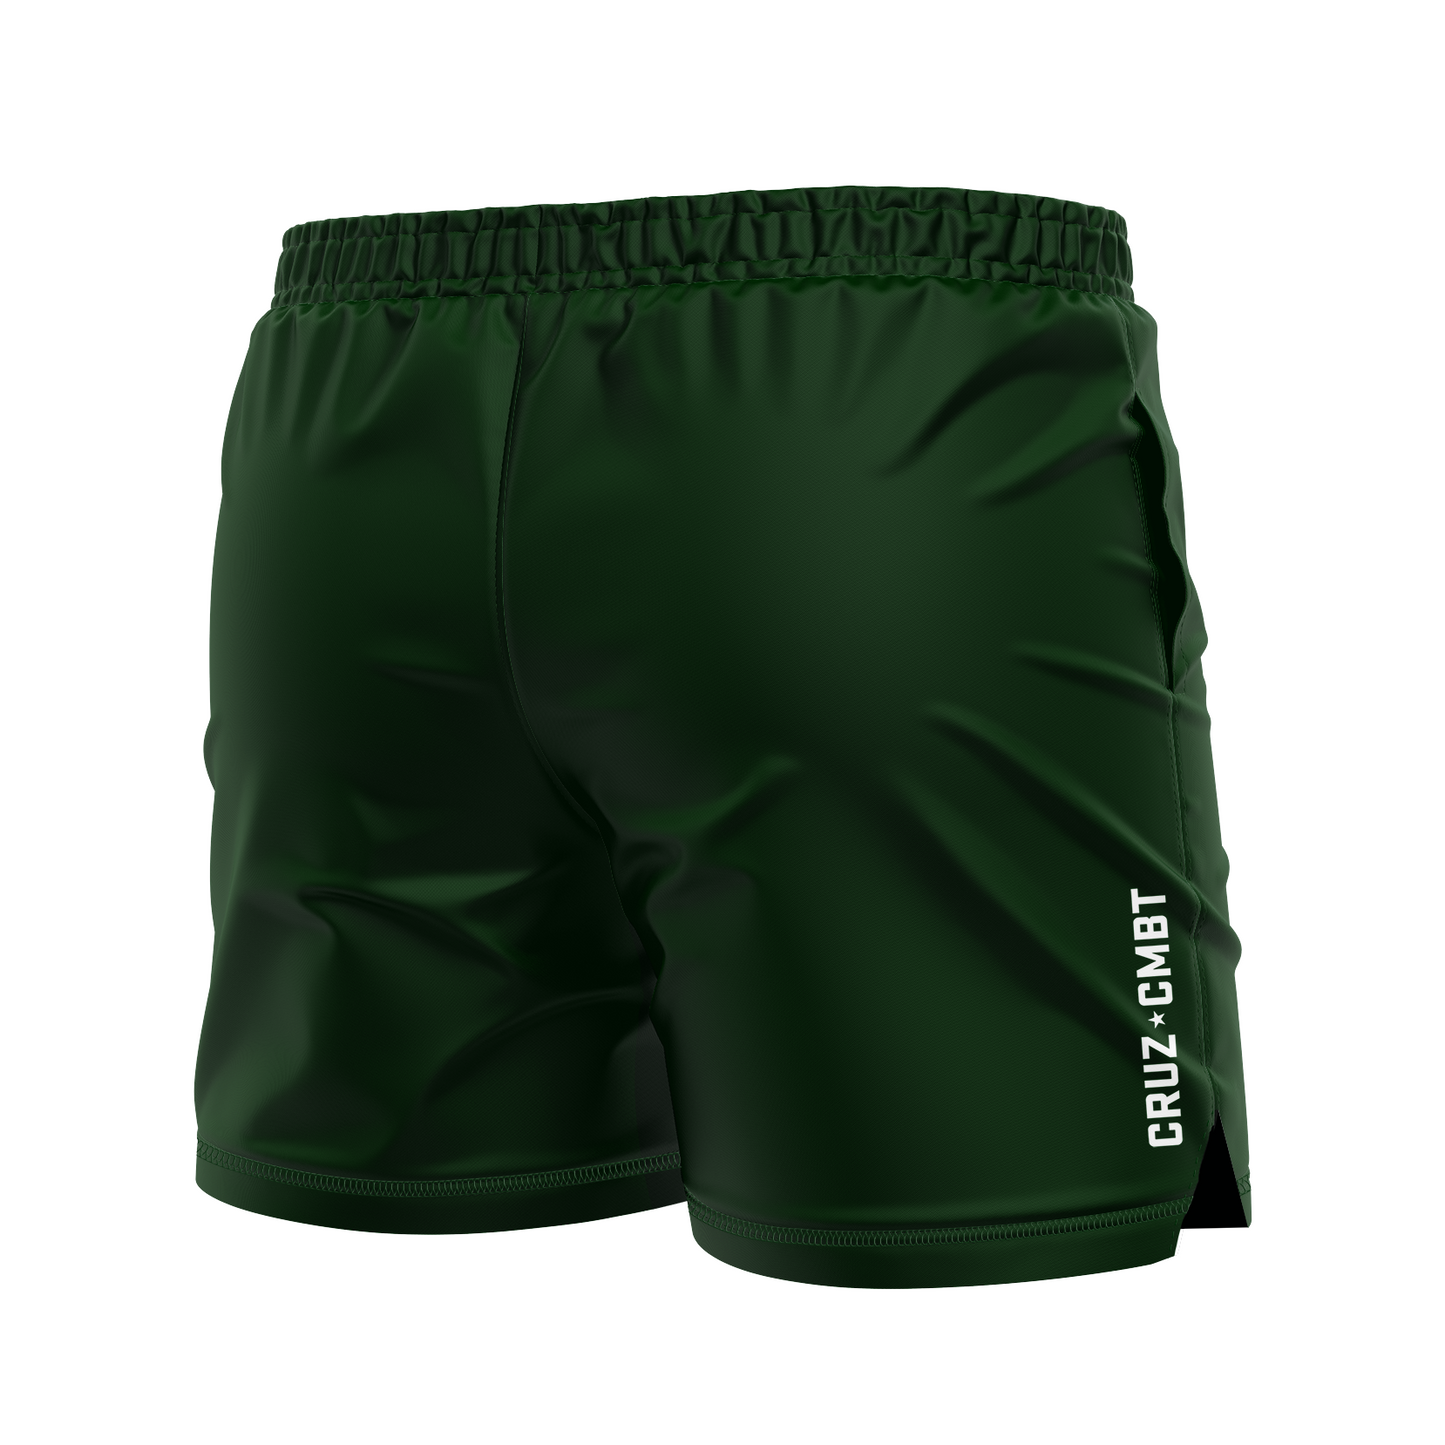 Base Collection men's FC shorts, hunter green